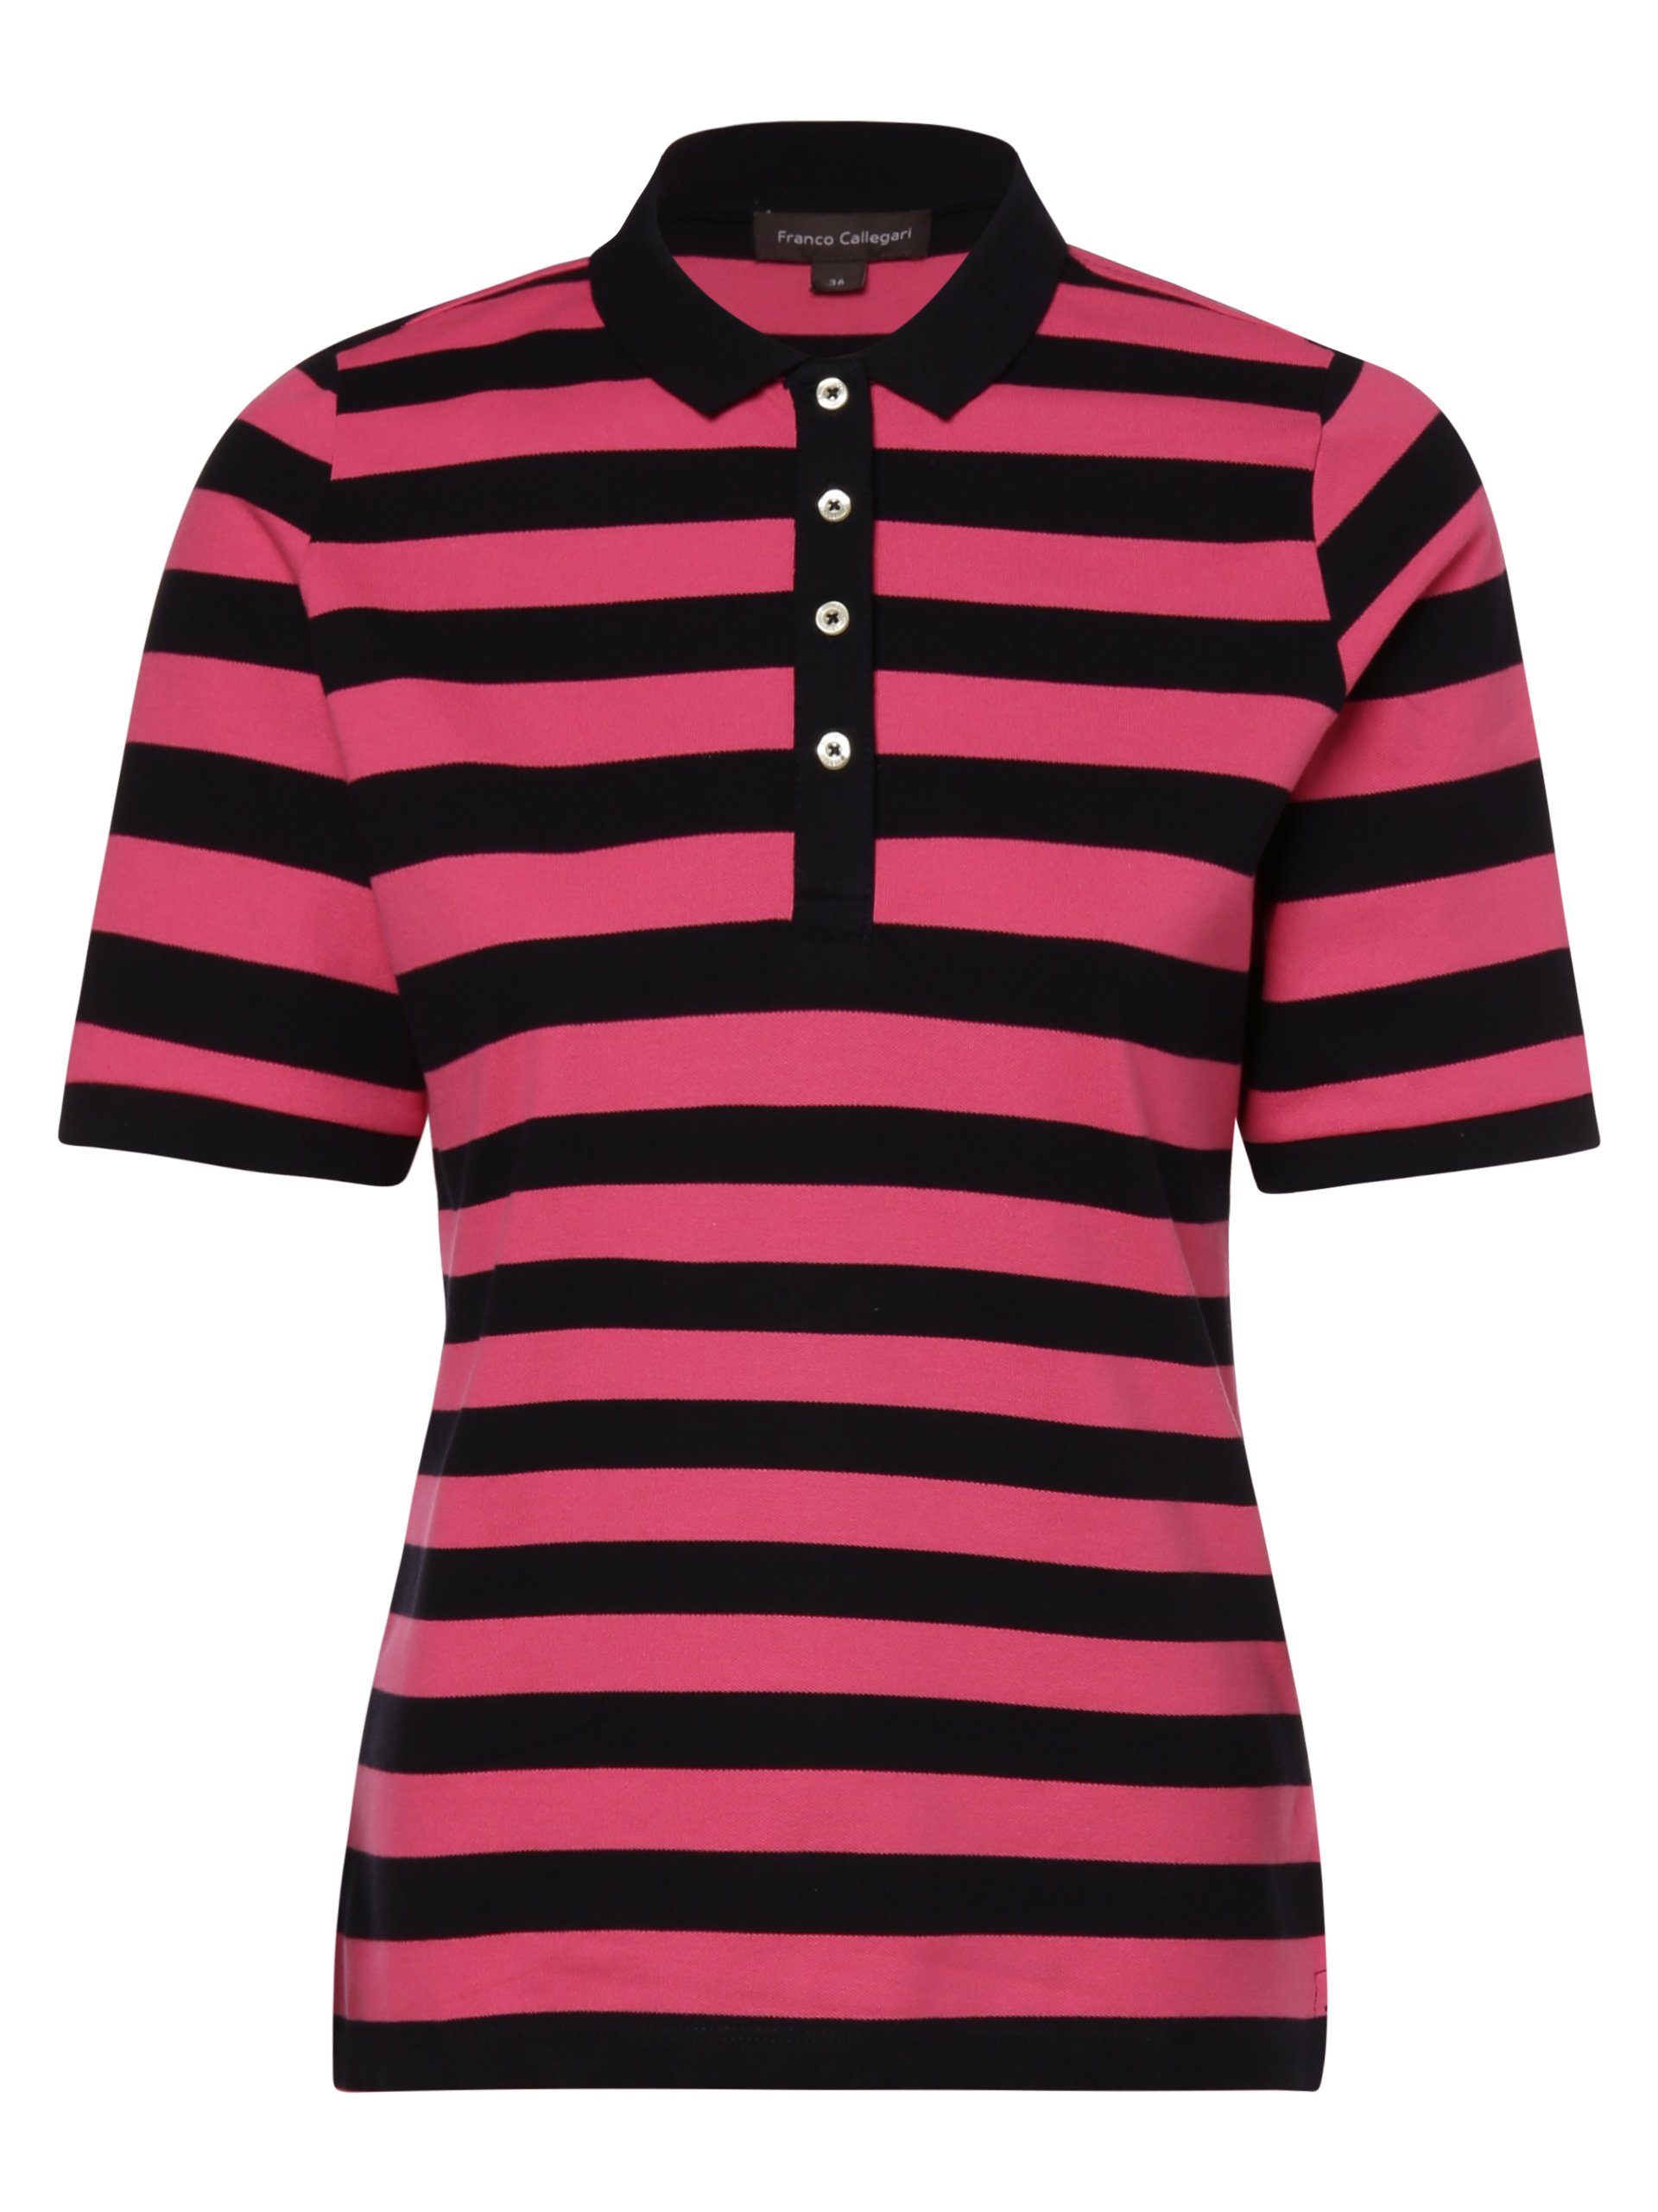 Franco Callegari Poloshirt marine pink | Poloshirts